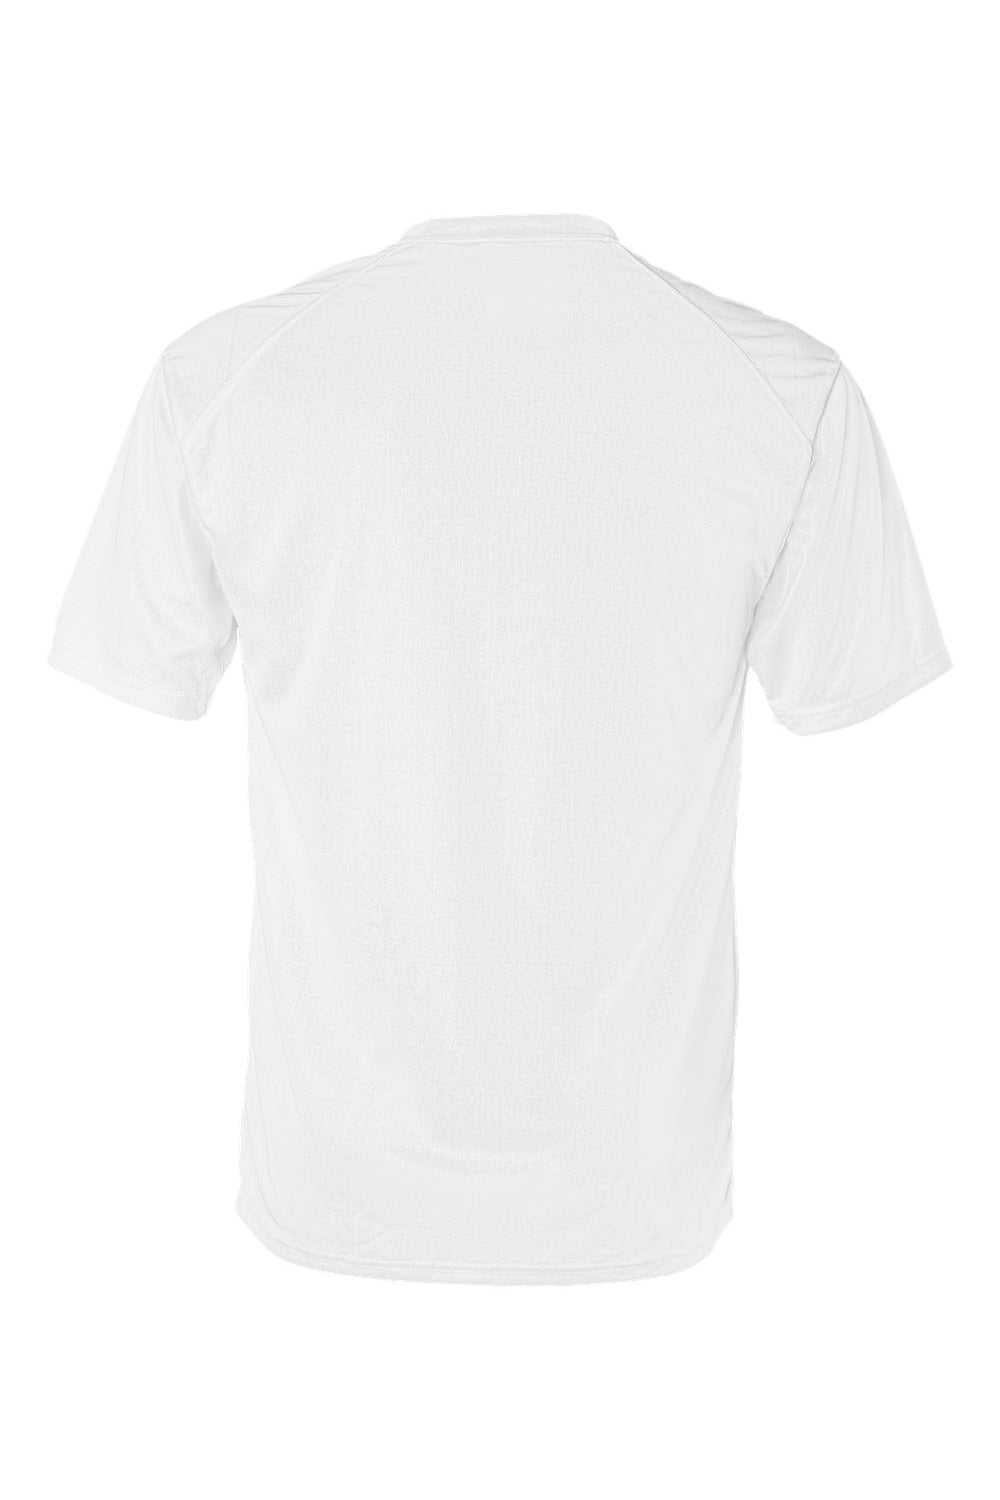 Badger 4120 Mens B-Core Moisture Wicking Short Sleeve Crewneck T-Shirt White Flat Back